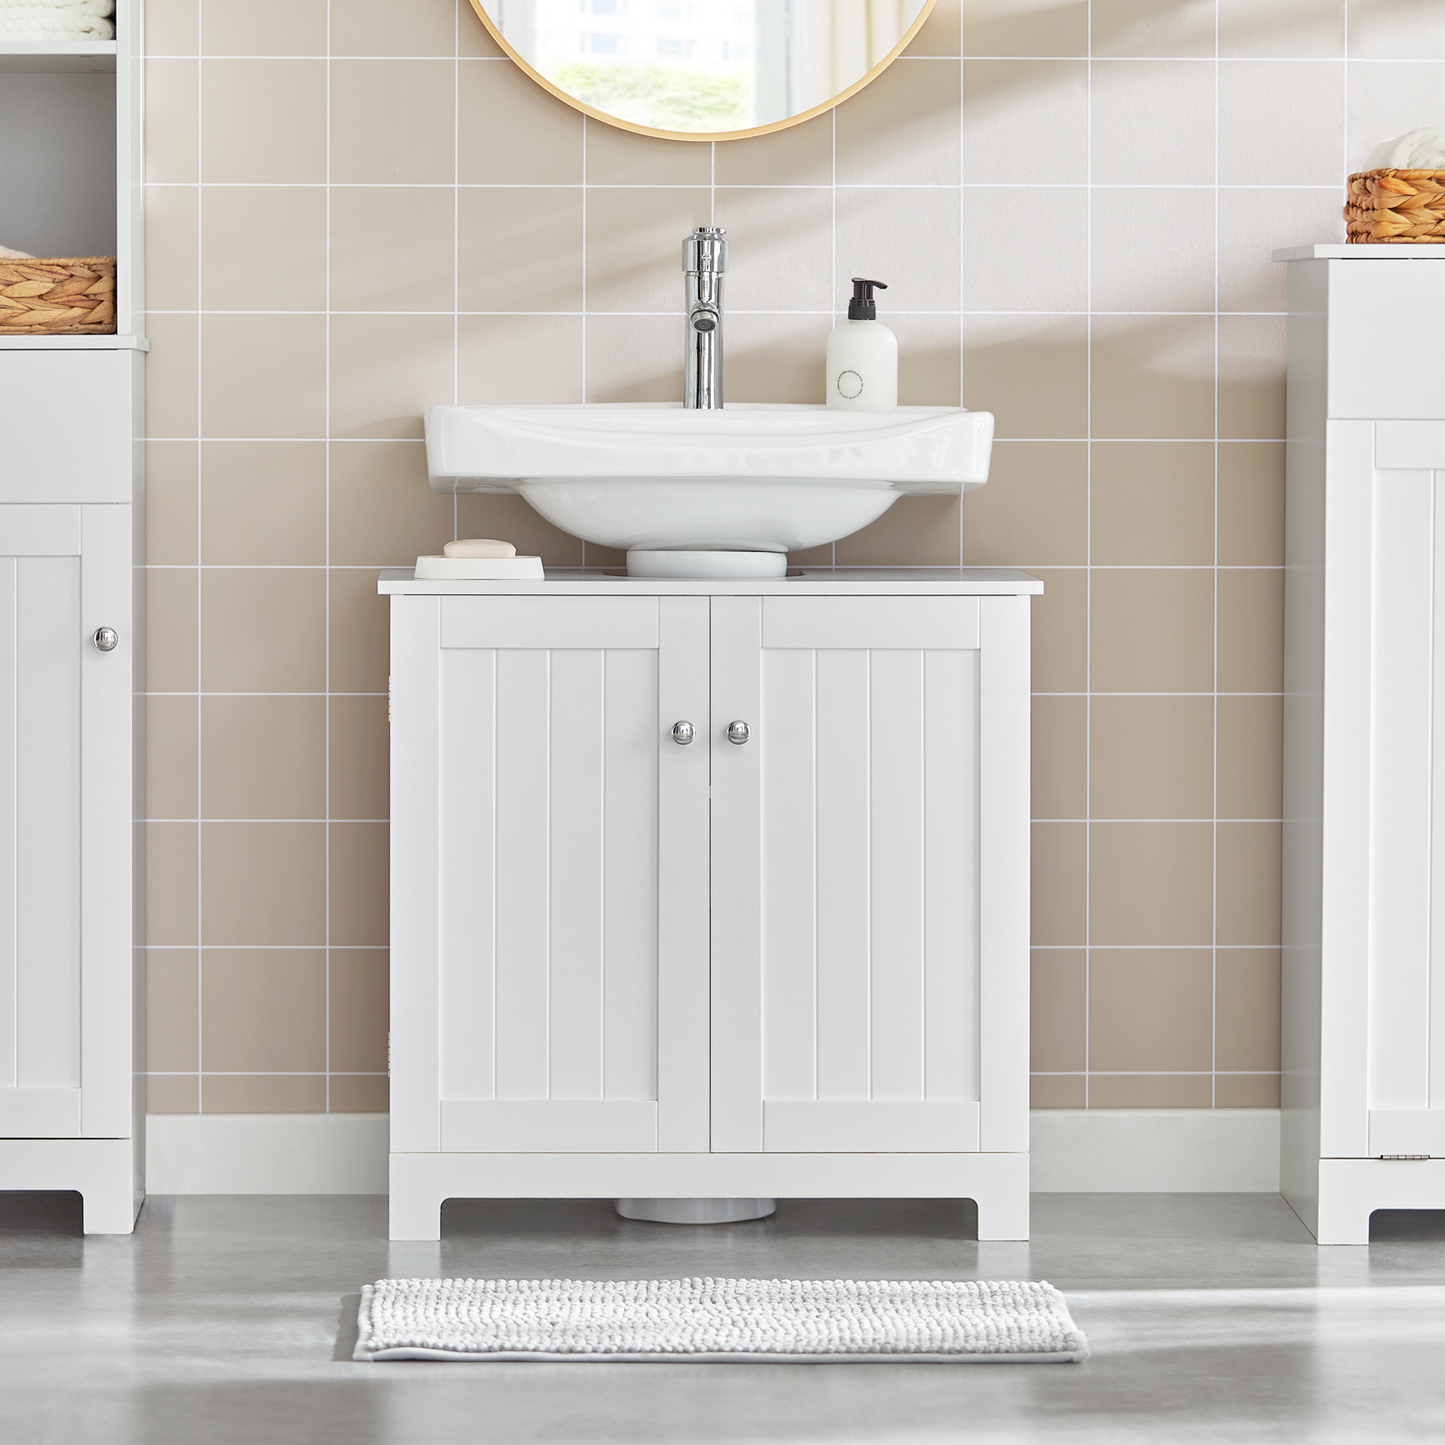 SoBuy Under Sink Cabinet Bathroom Vanity Unit, Suitable For Pedestal Sinks